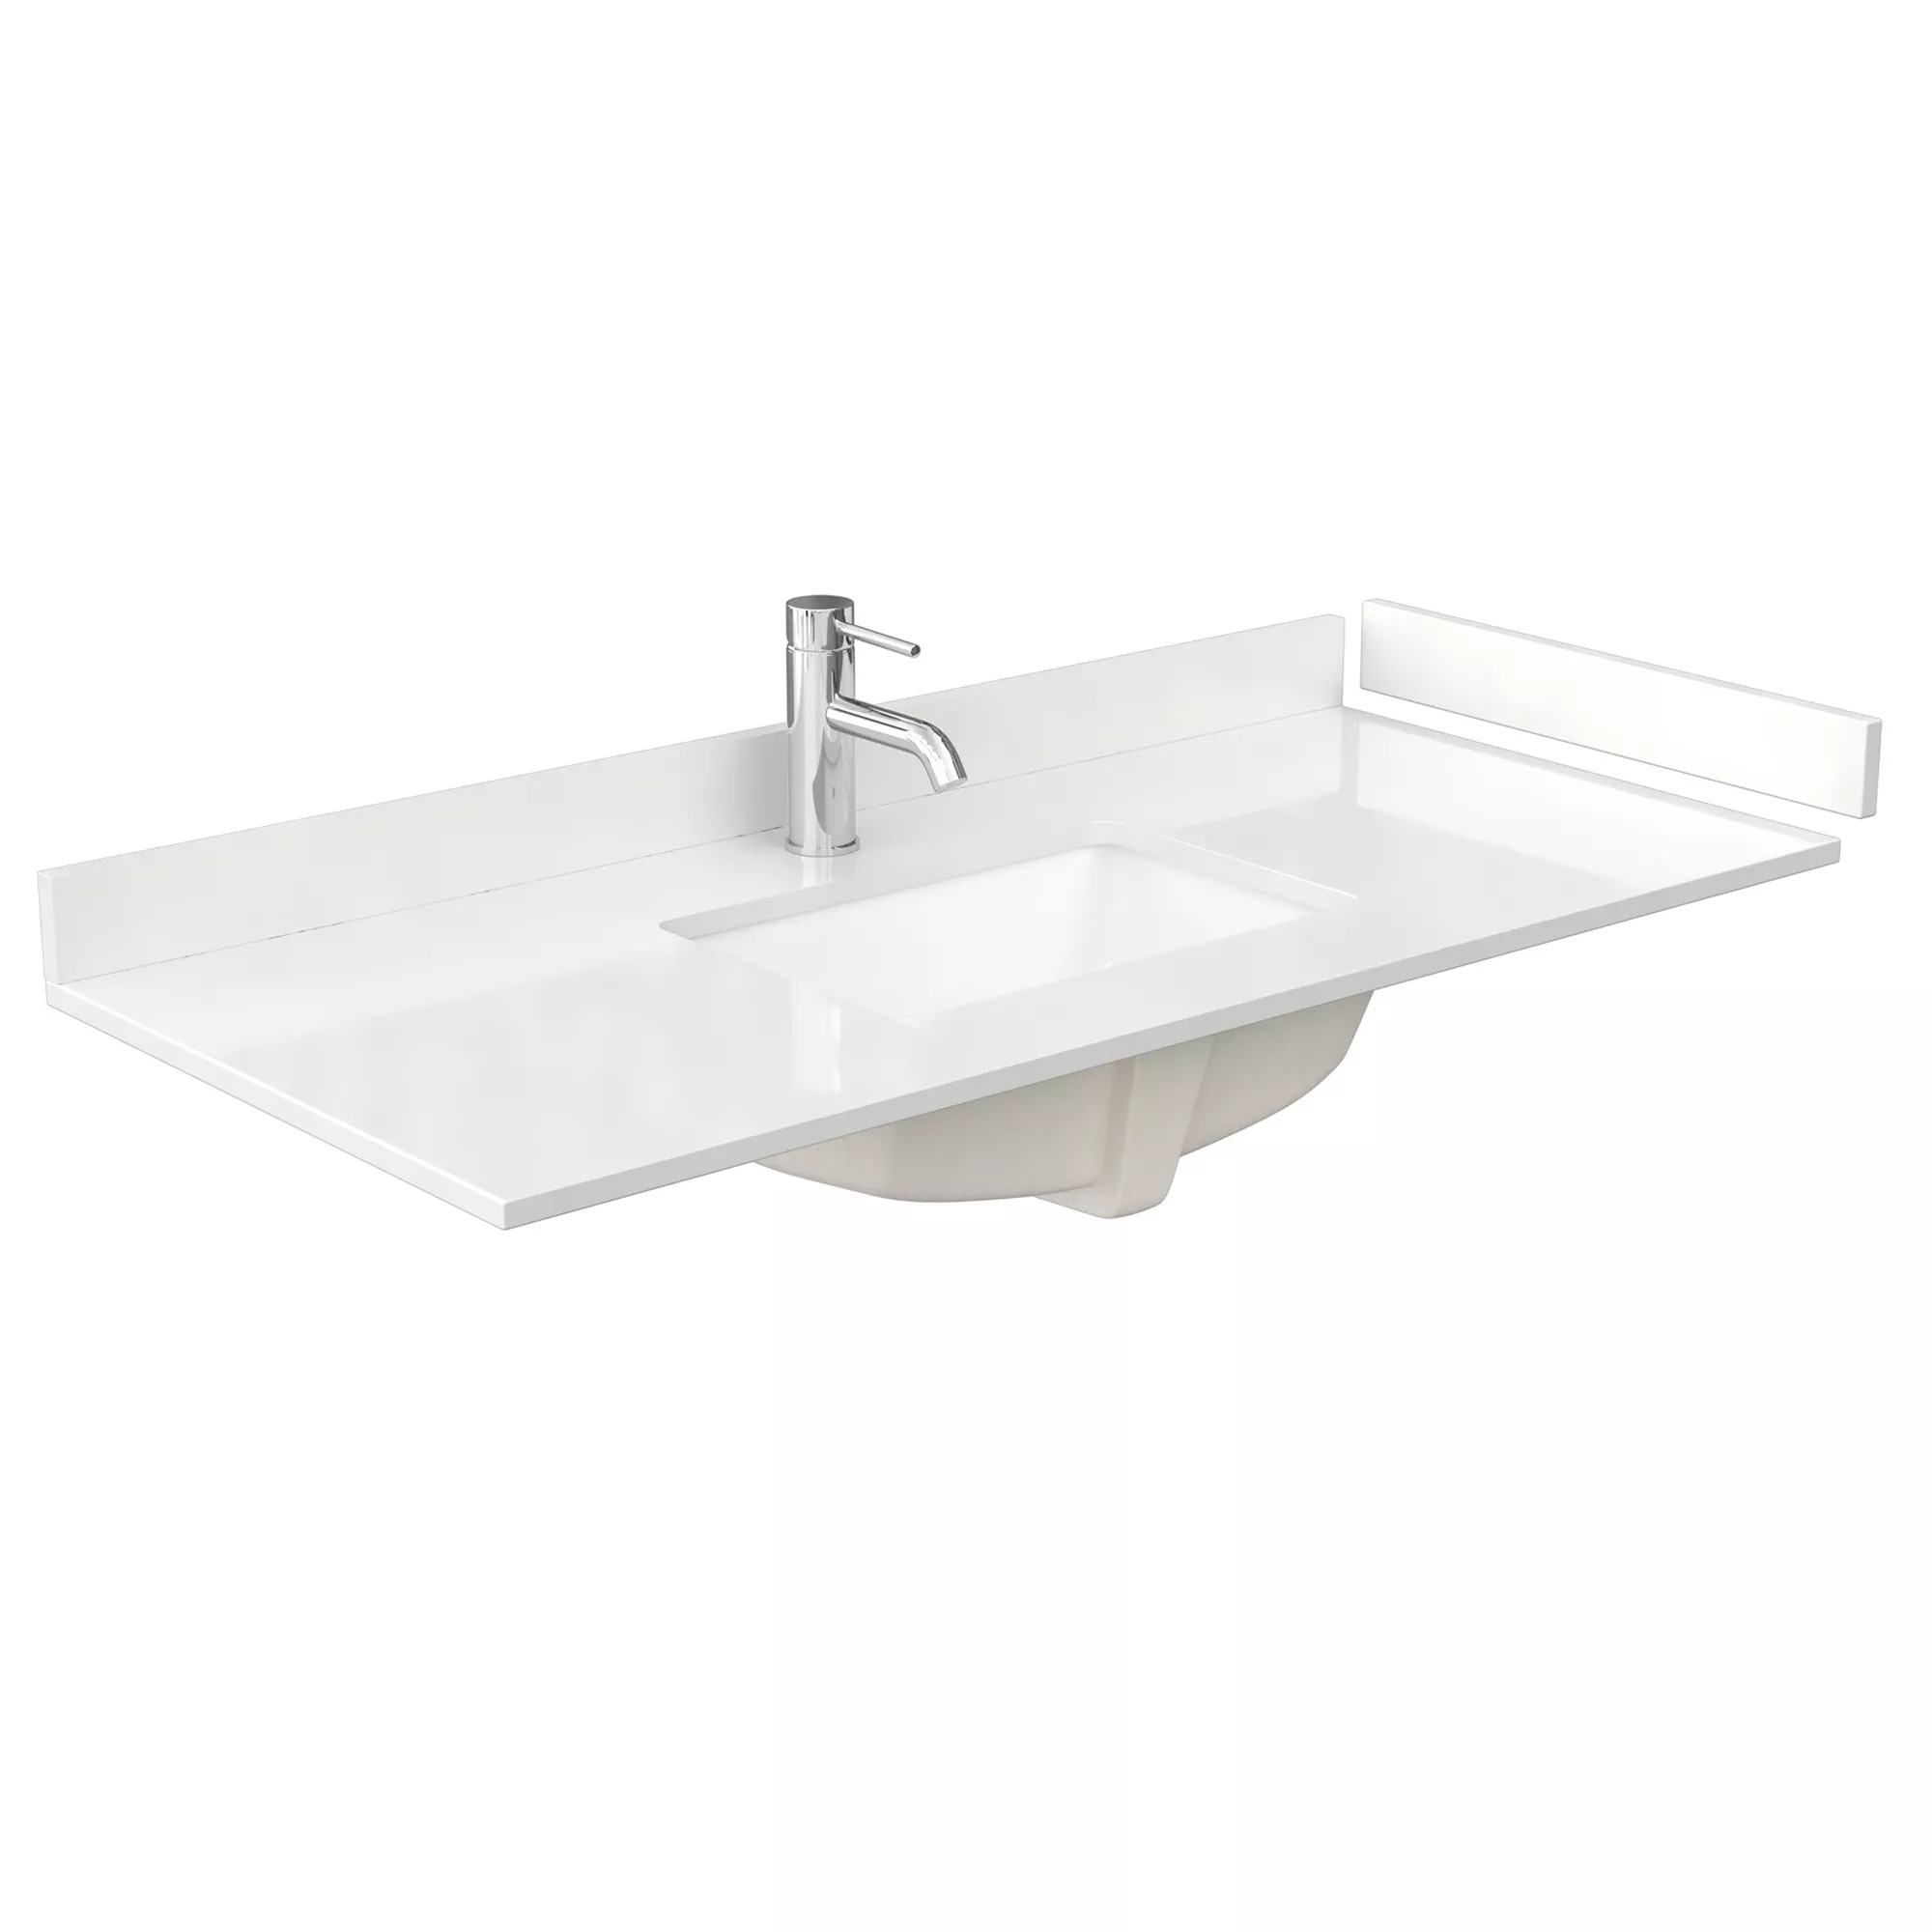 48" single countertop - white quartz (1000) with undermount square sink (1-hole) - includes backsplash and sidesplash